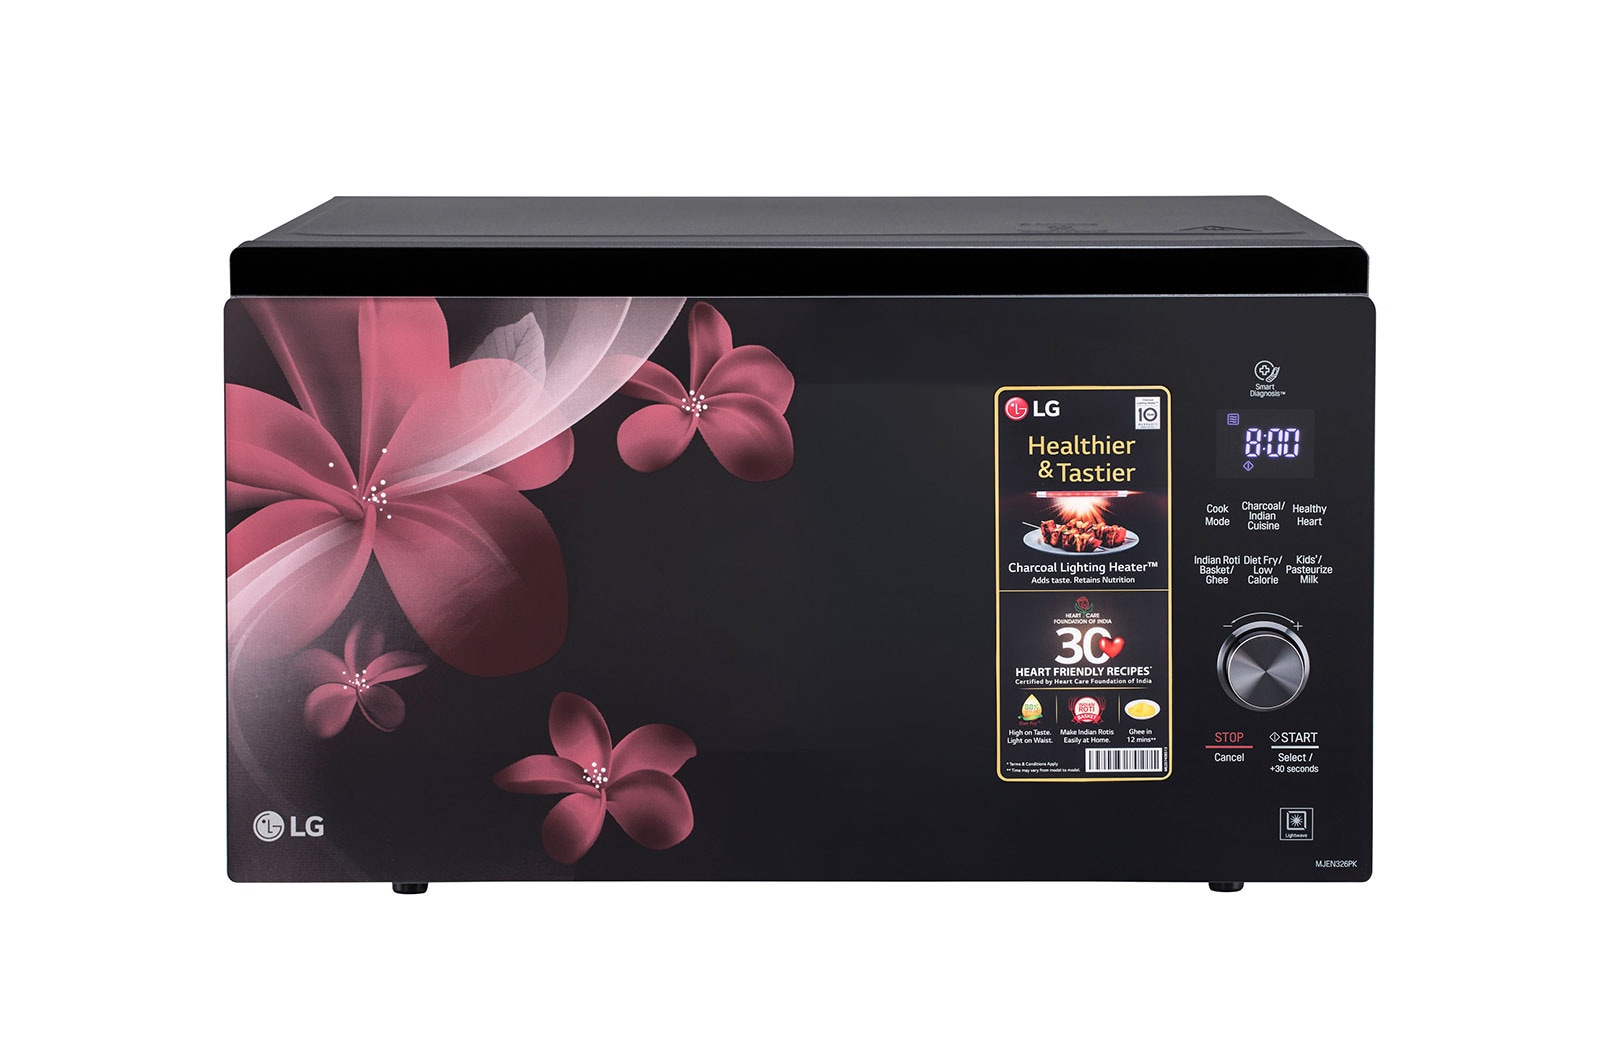 LG 32 L Convection Microwave Oven  (MJEN326PK, Black), MJEN326PK